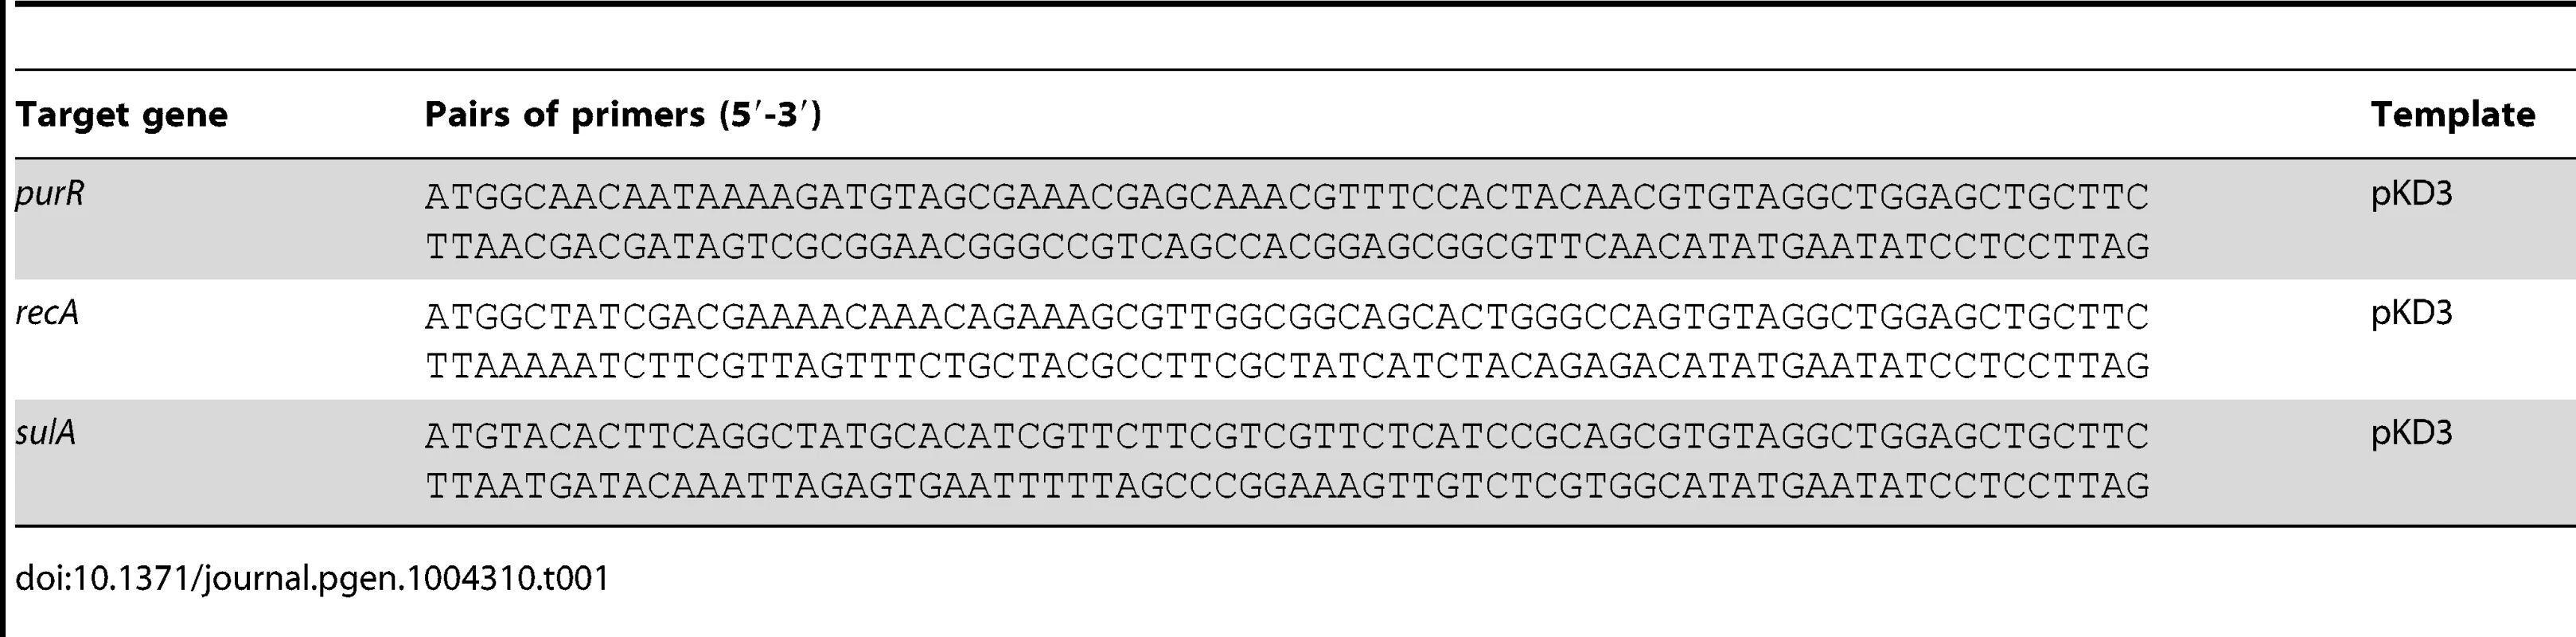 Primers used for construction of chromosomal gene deletions.